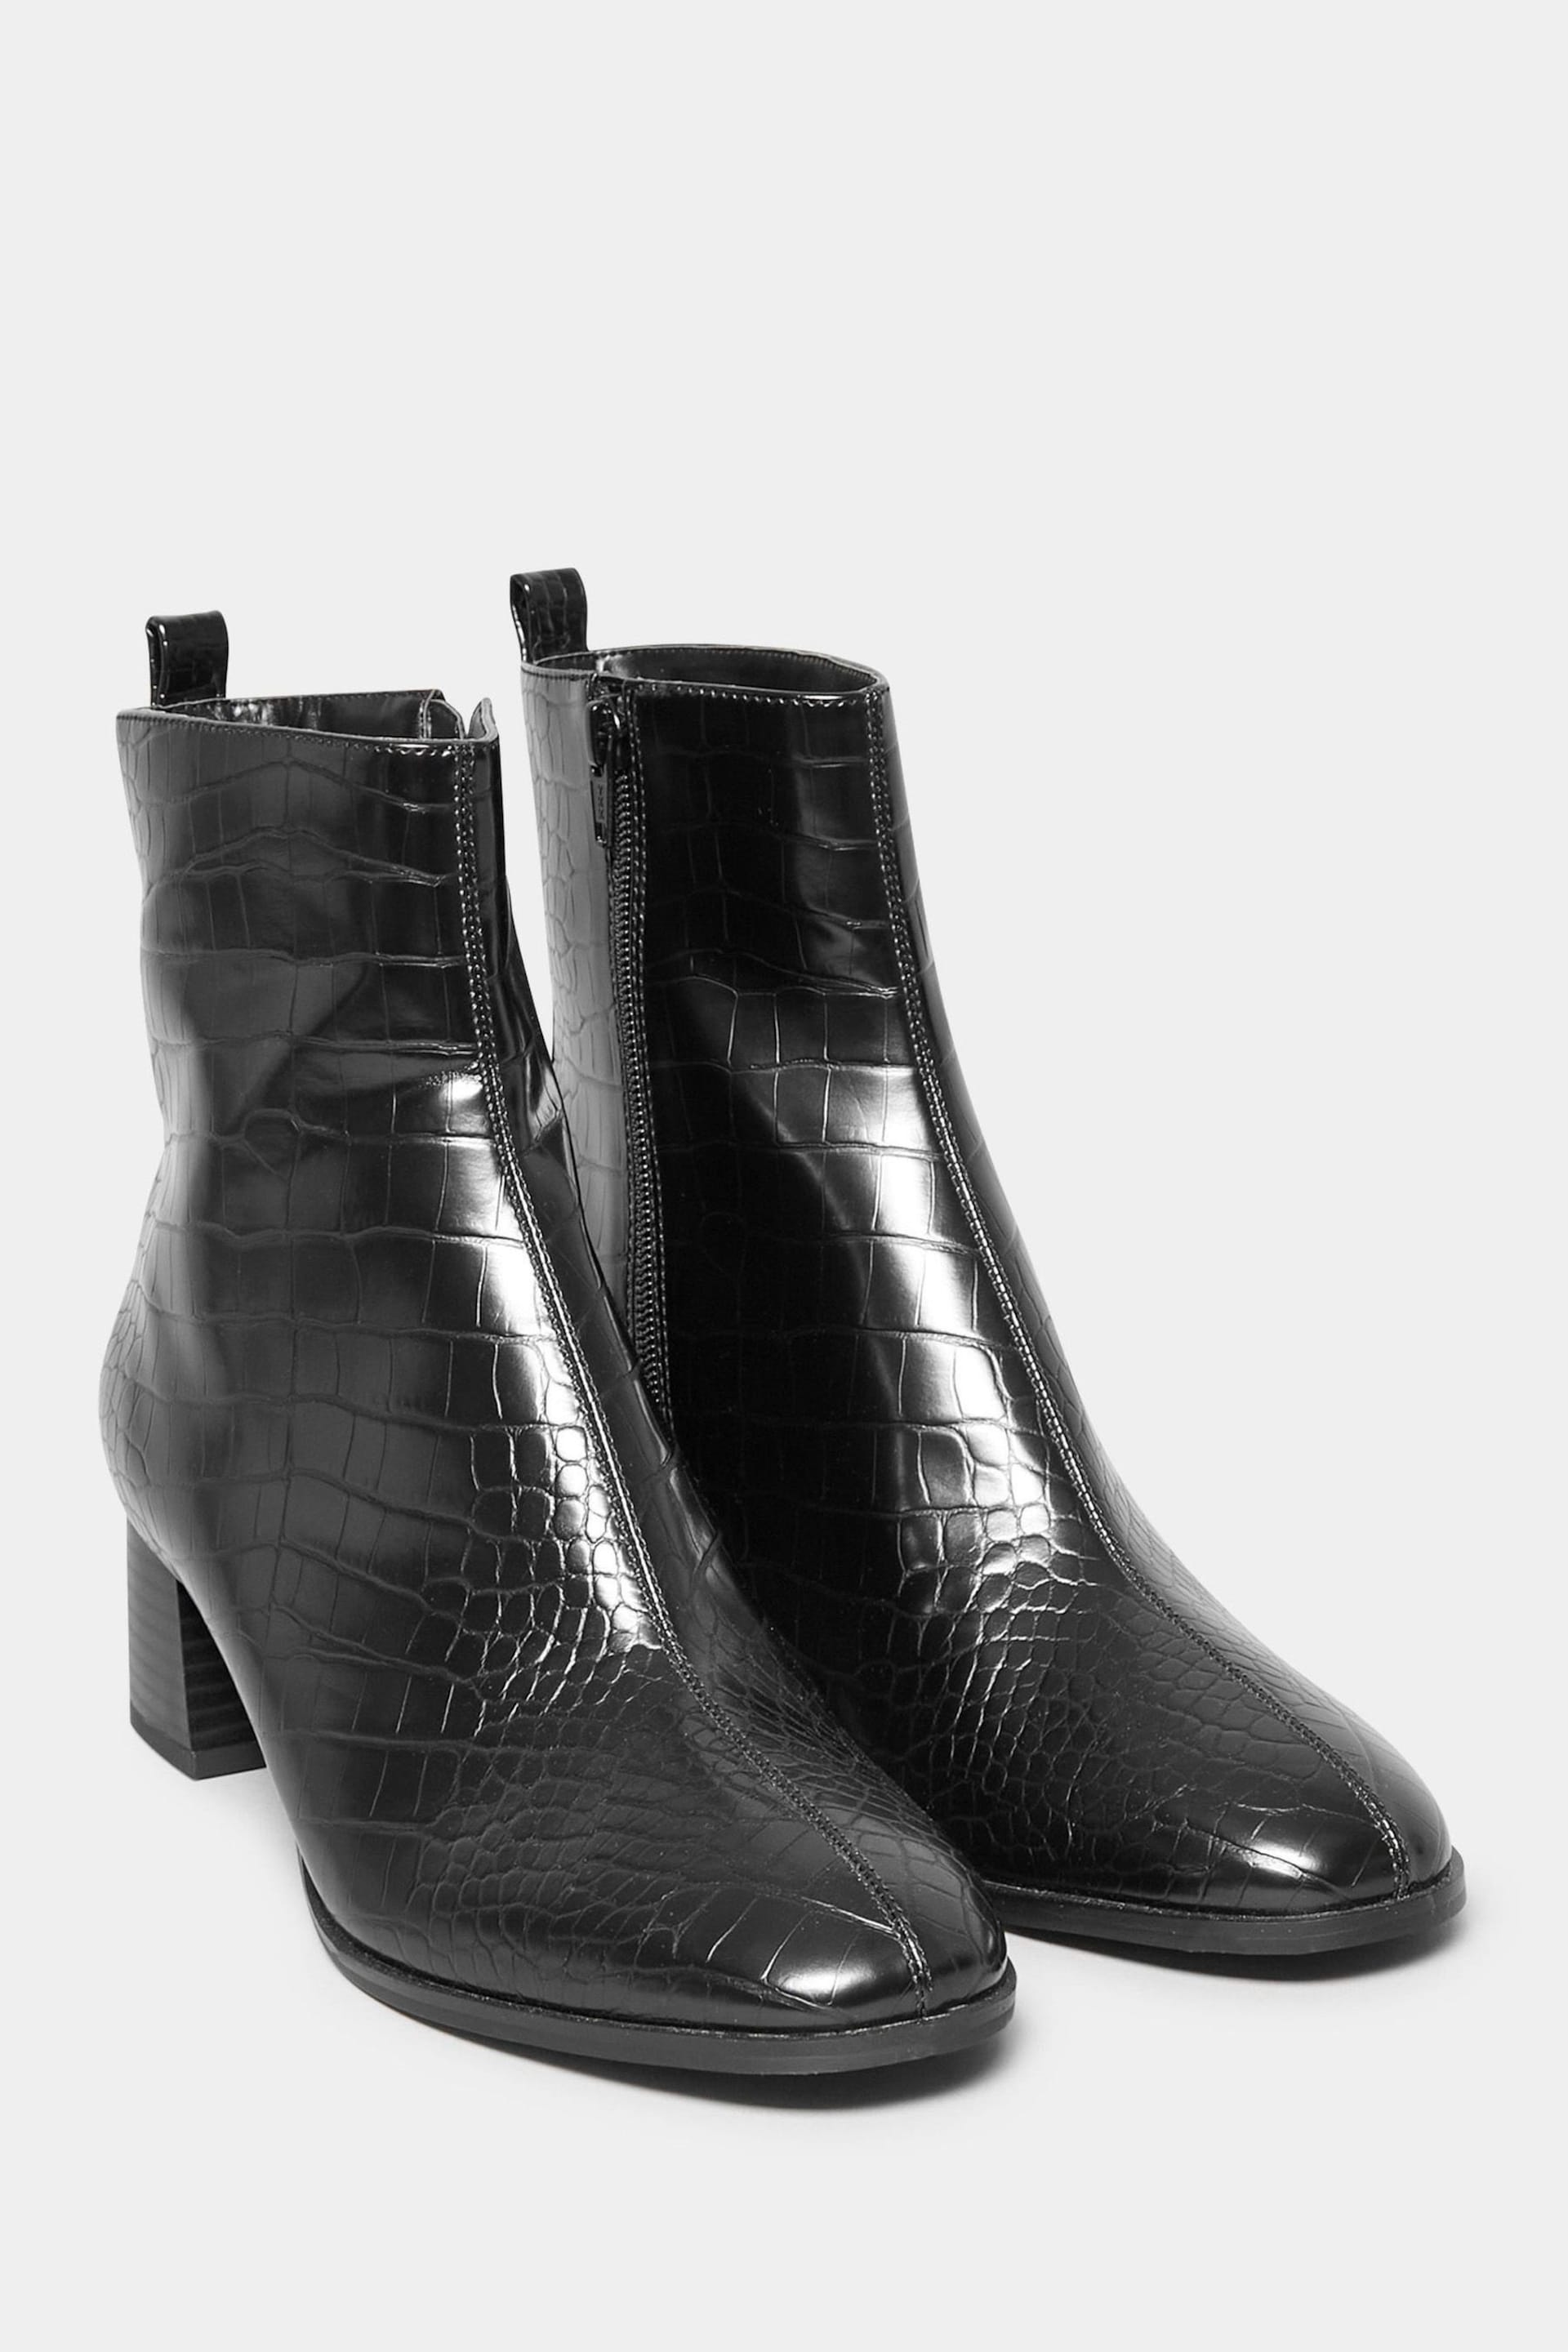 Long Tall Sally Black Block Heel Boots - Image 2 of 4